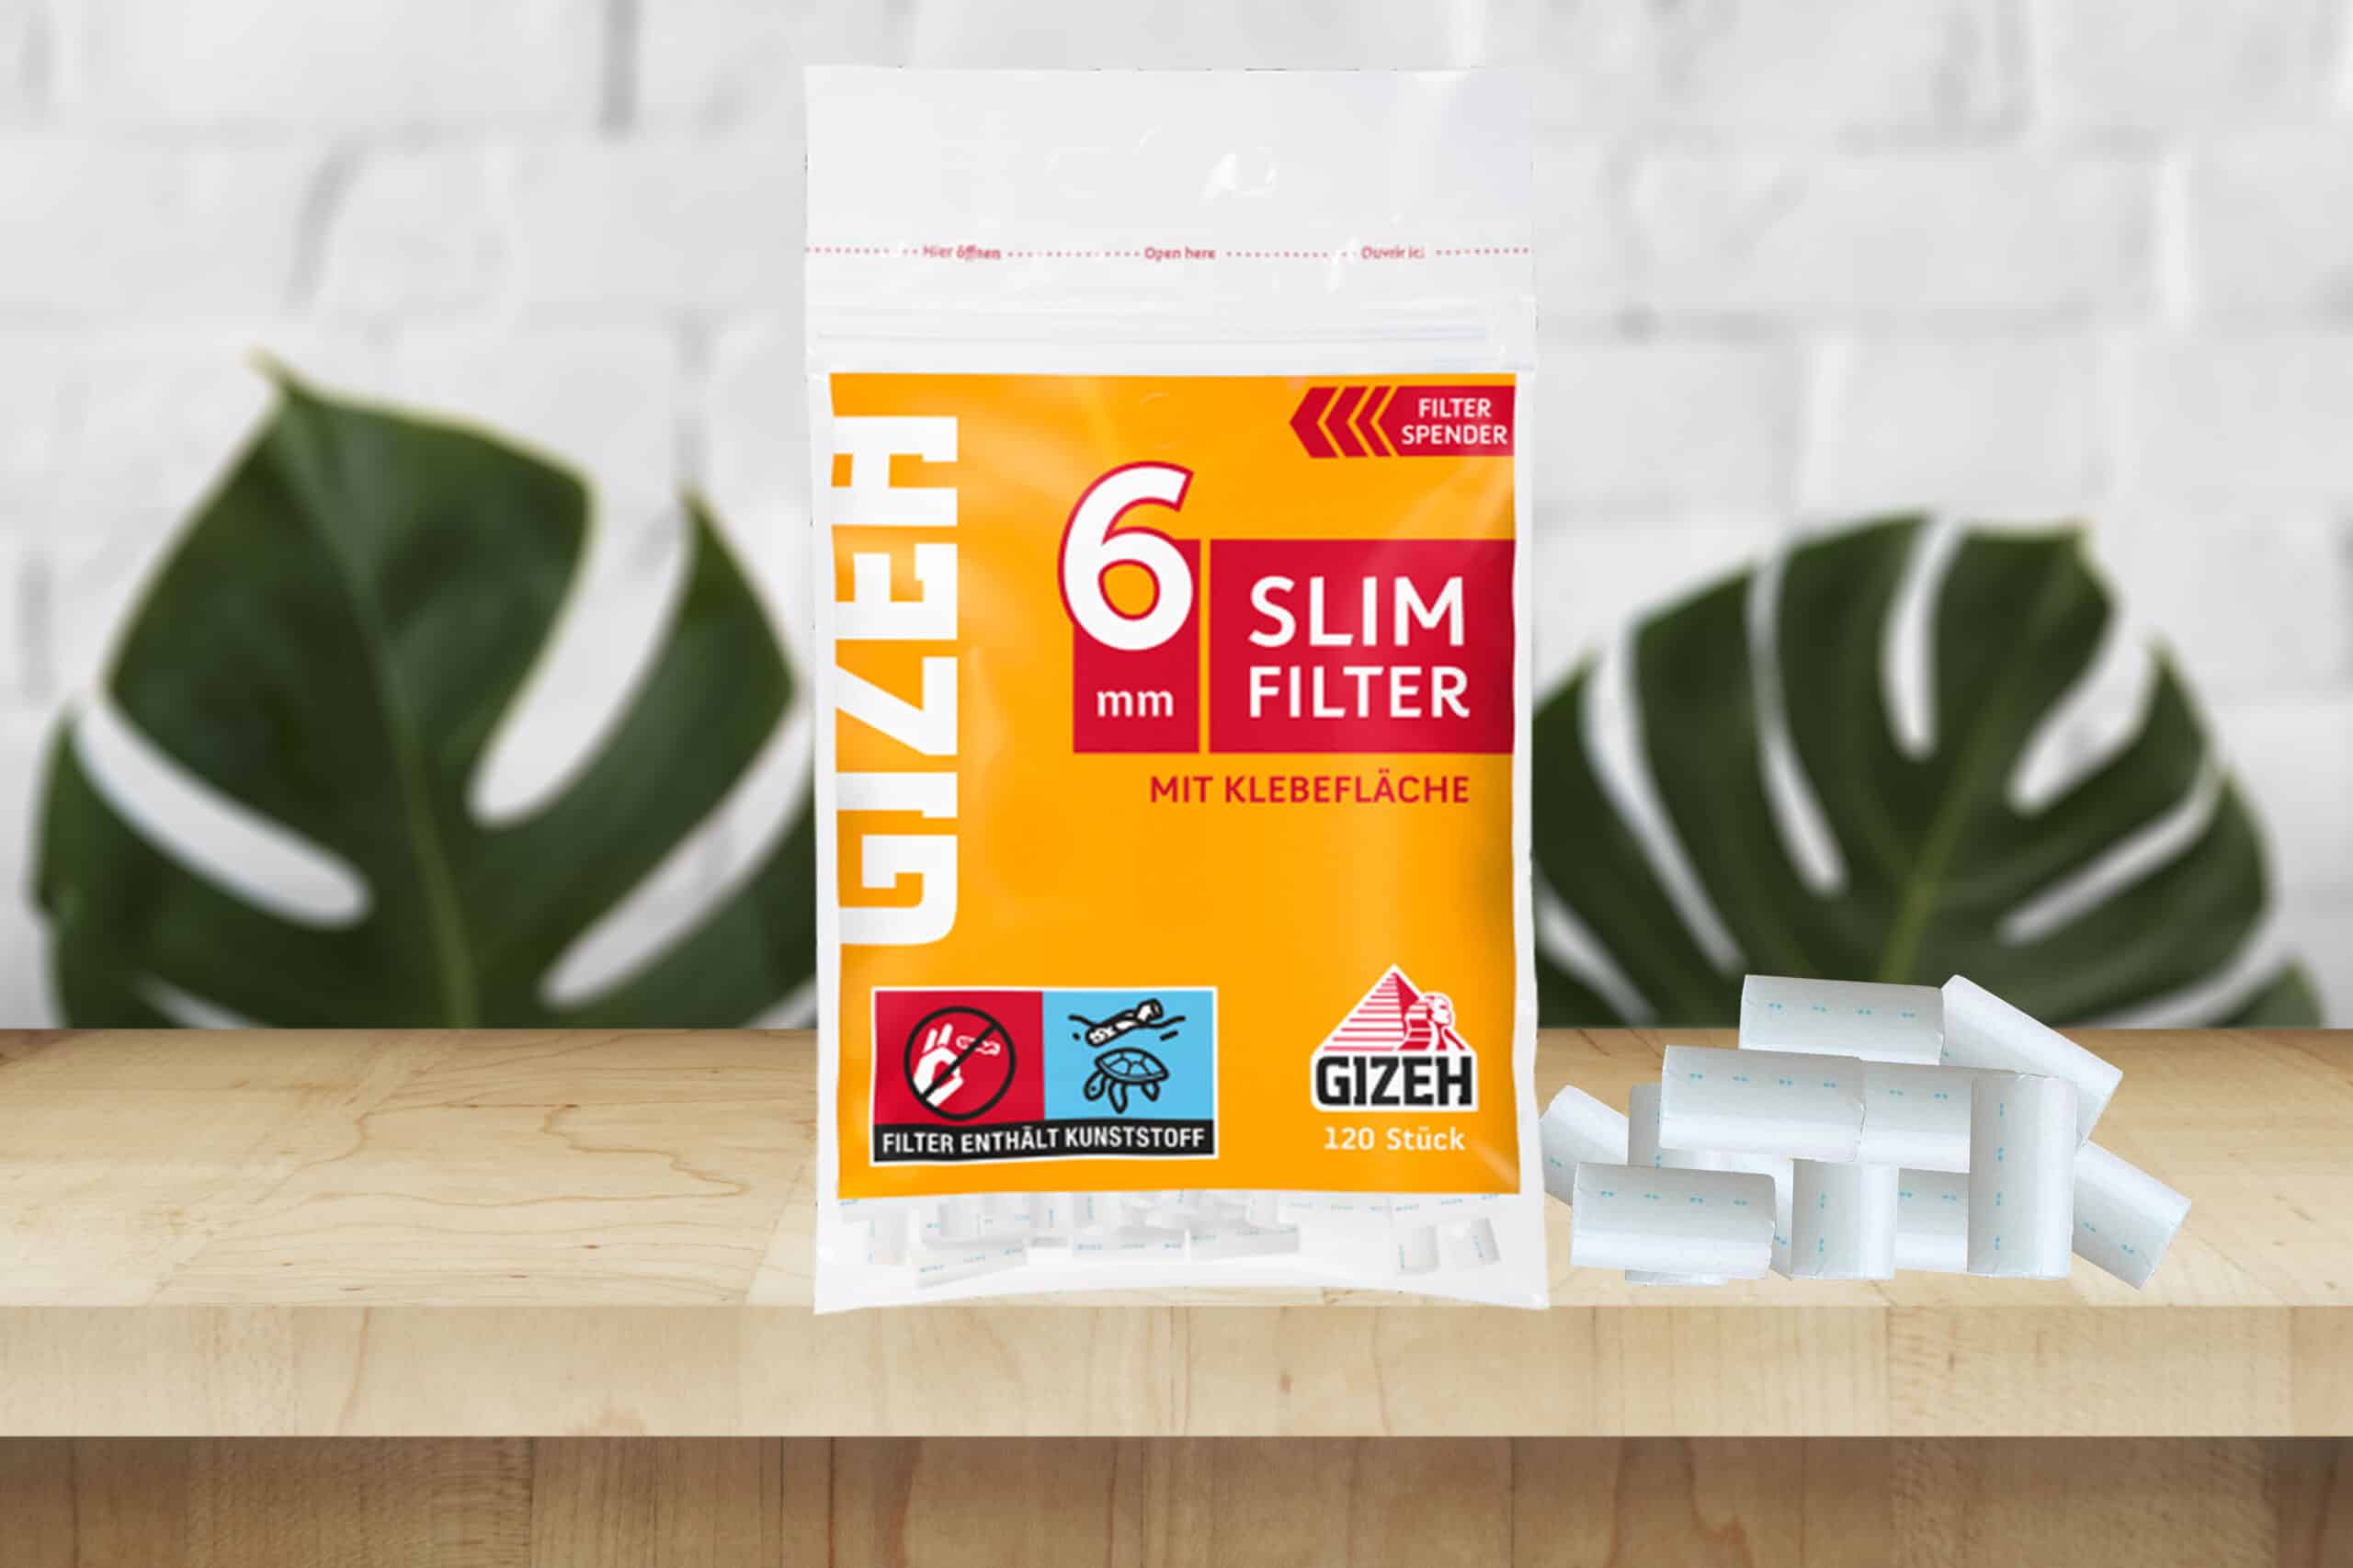 Gizeh Slim Filter 6 mm 1 Packung, 120 Filter, Ab 0,90 €